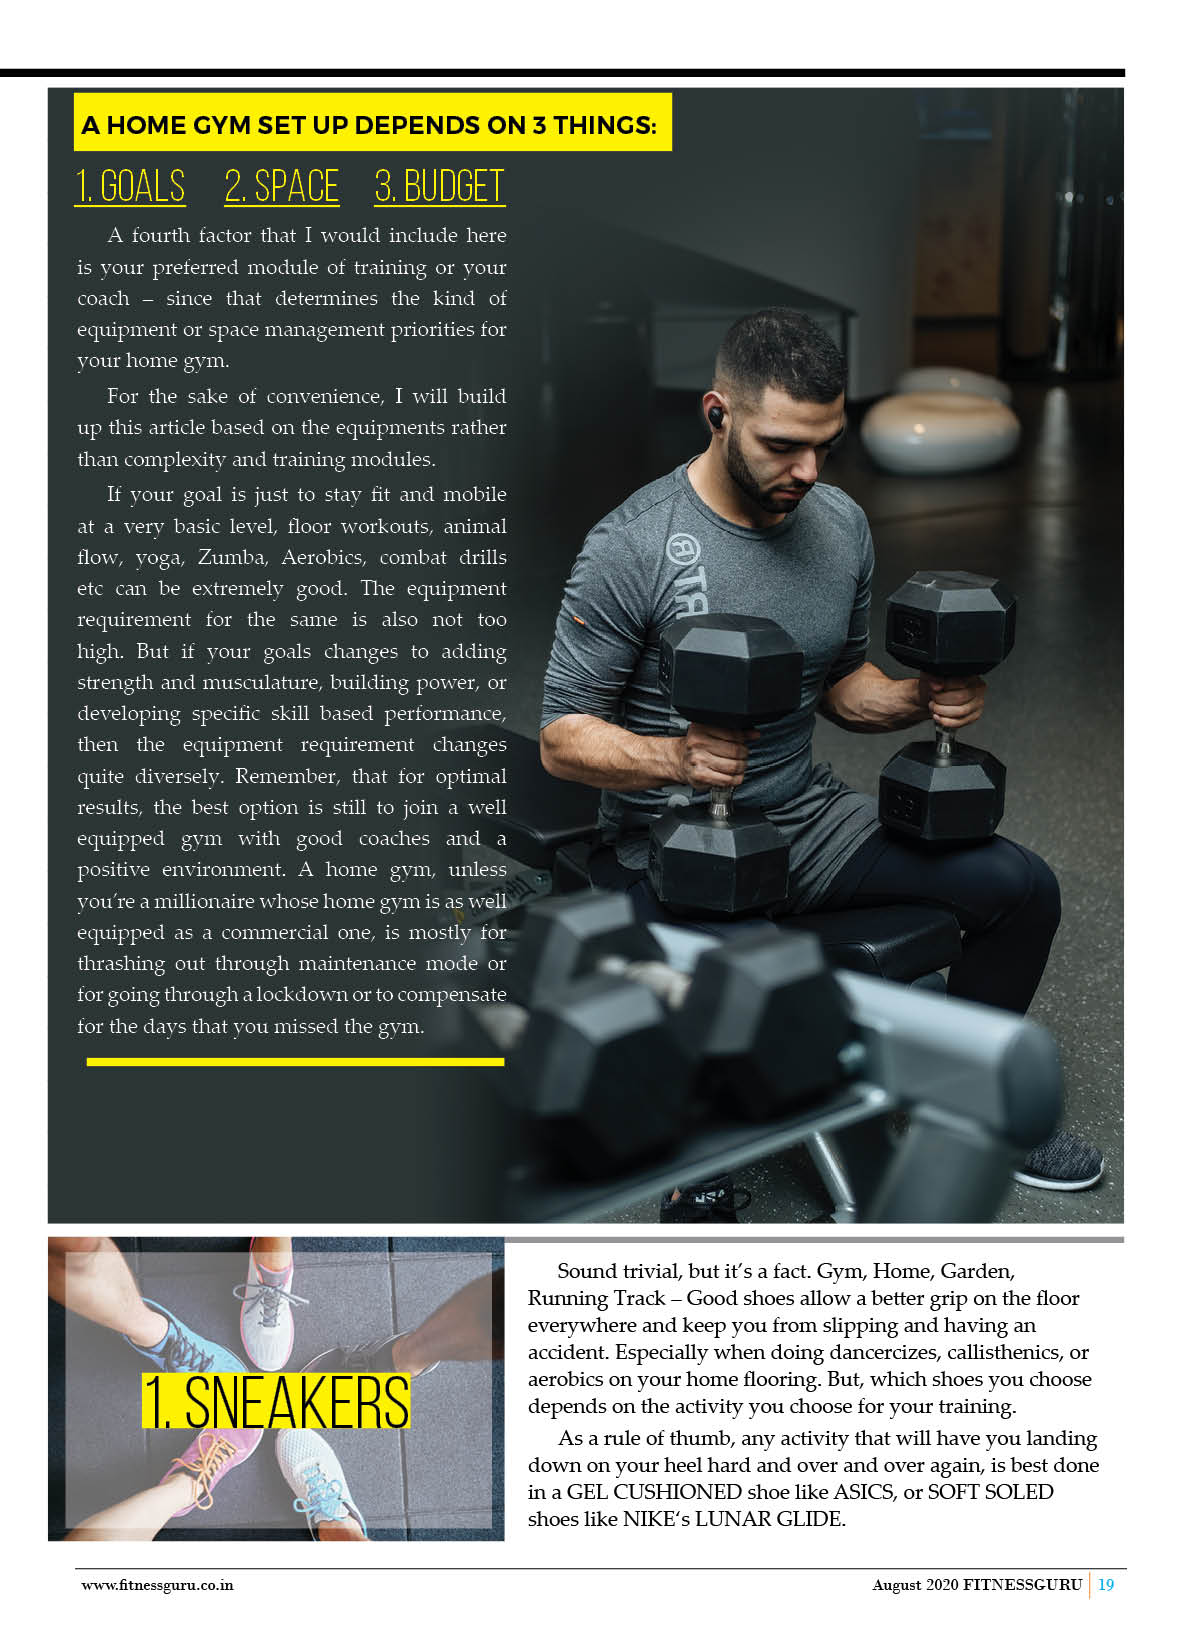 FitnessGuru Magazine August 2020 Issue